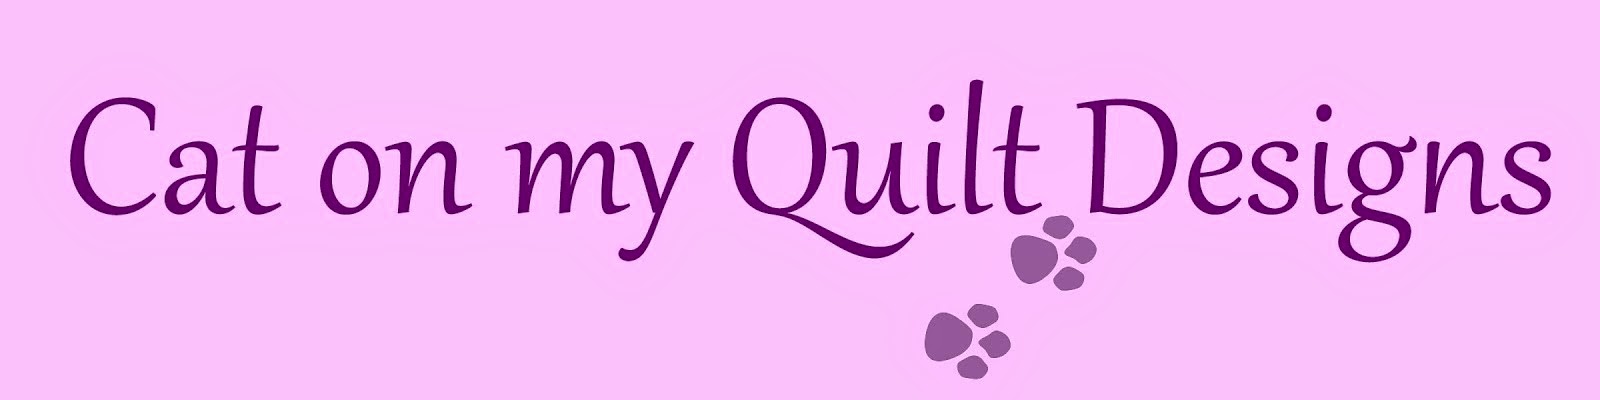 Cat on my Quilt Designs